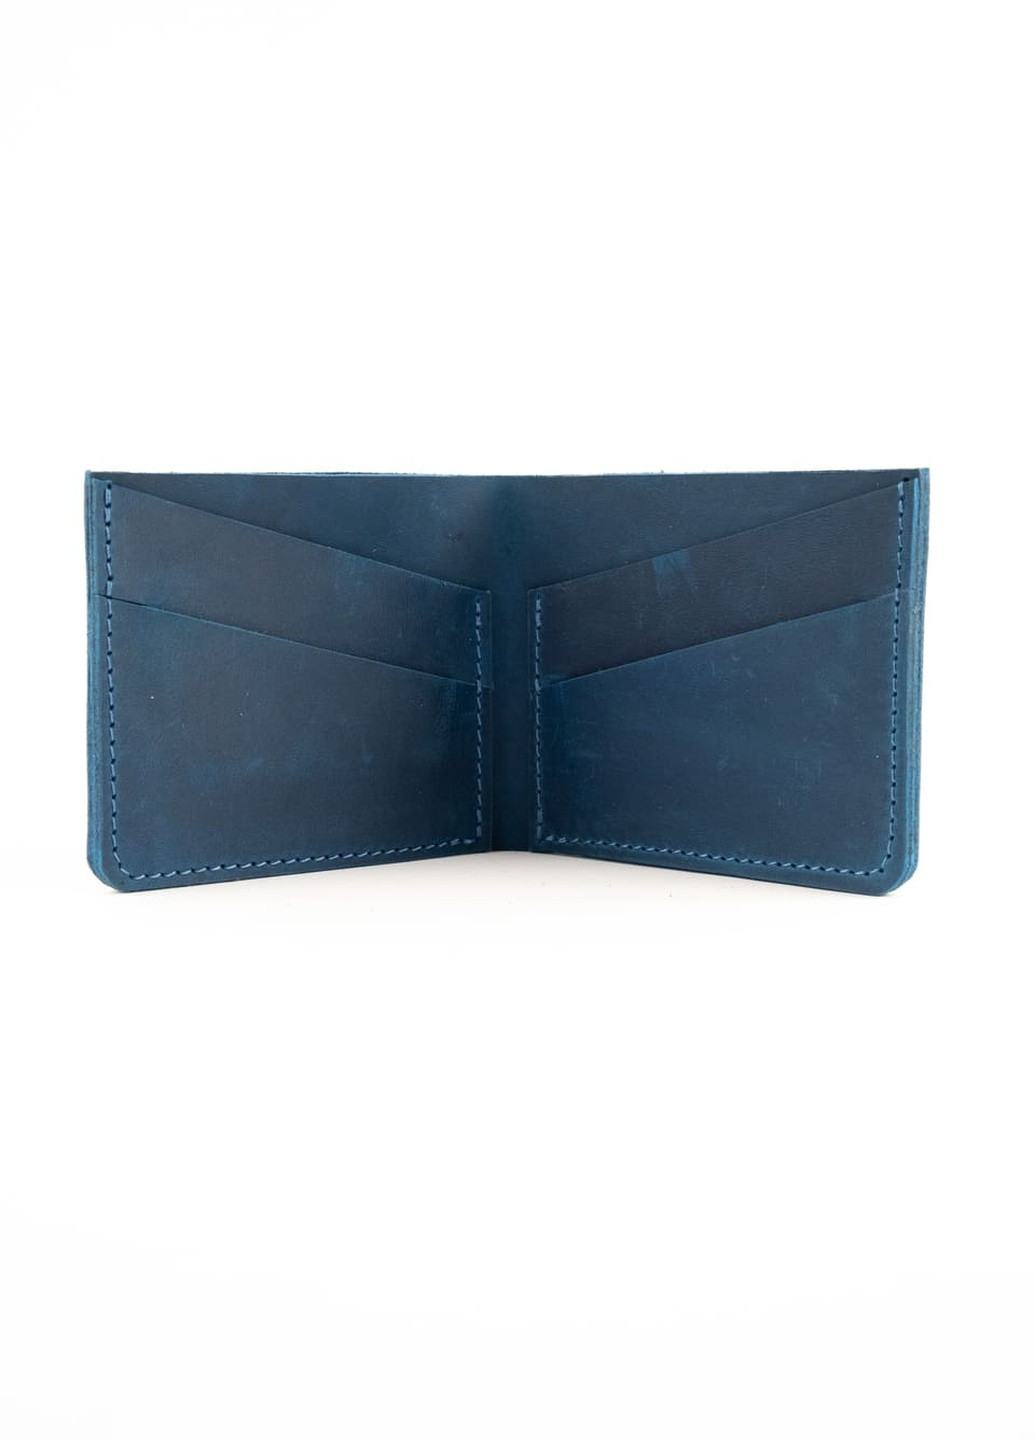 Кожаный бумажник кошелек бифолд Jet синий винтажный Kozhanty (252316665)